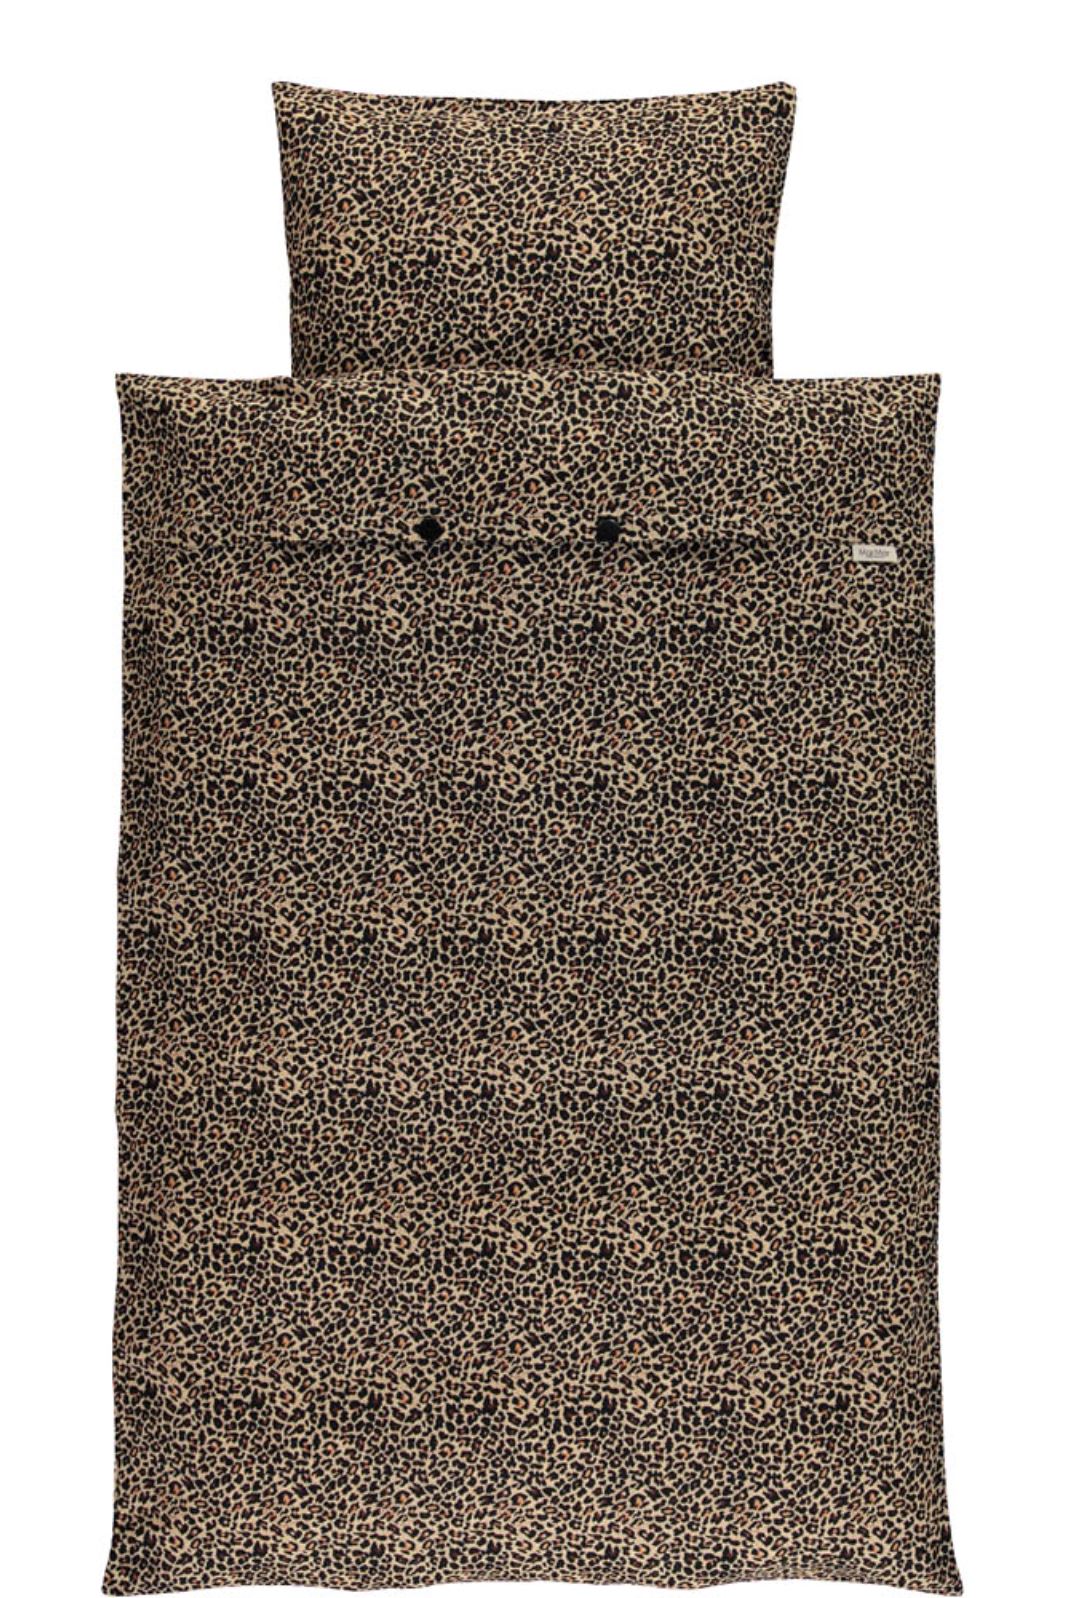 MarMar - Bed Linen baby - Brown Leo - 0902 - Light Leopard Print Acc Sengetøj 